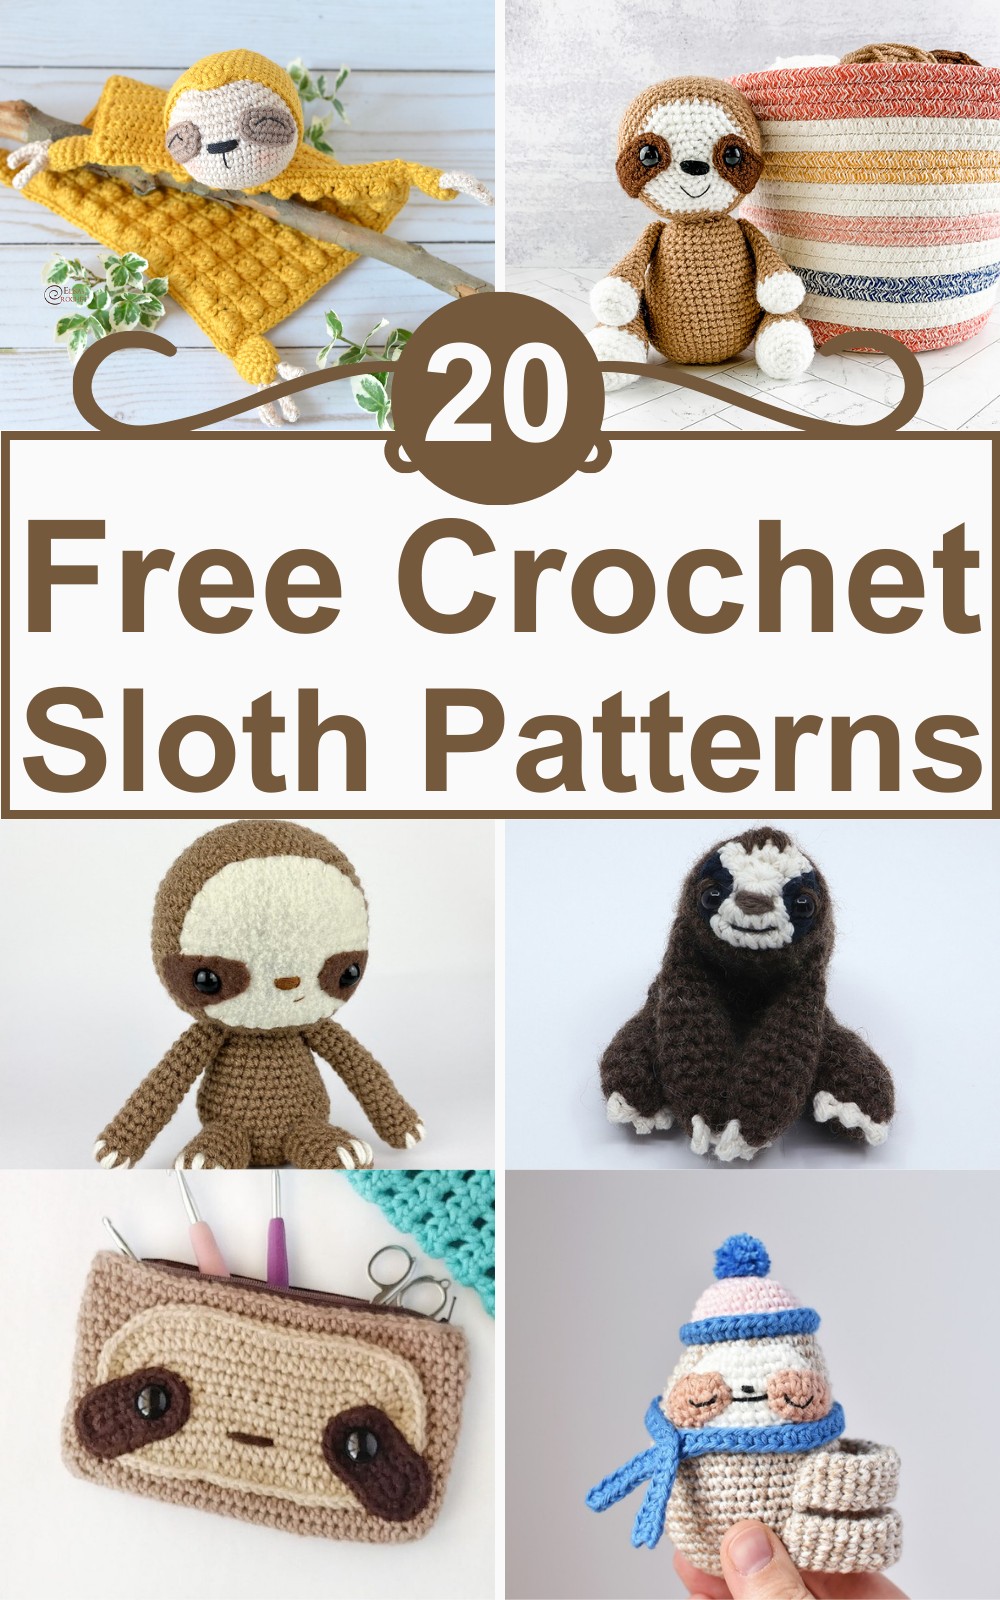 5 Free Crochet Sloth Patterns